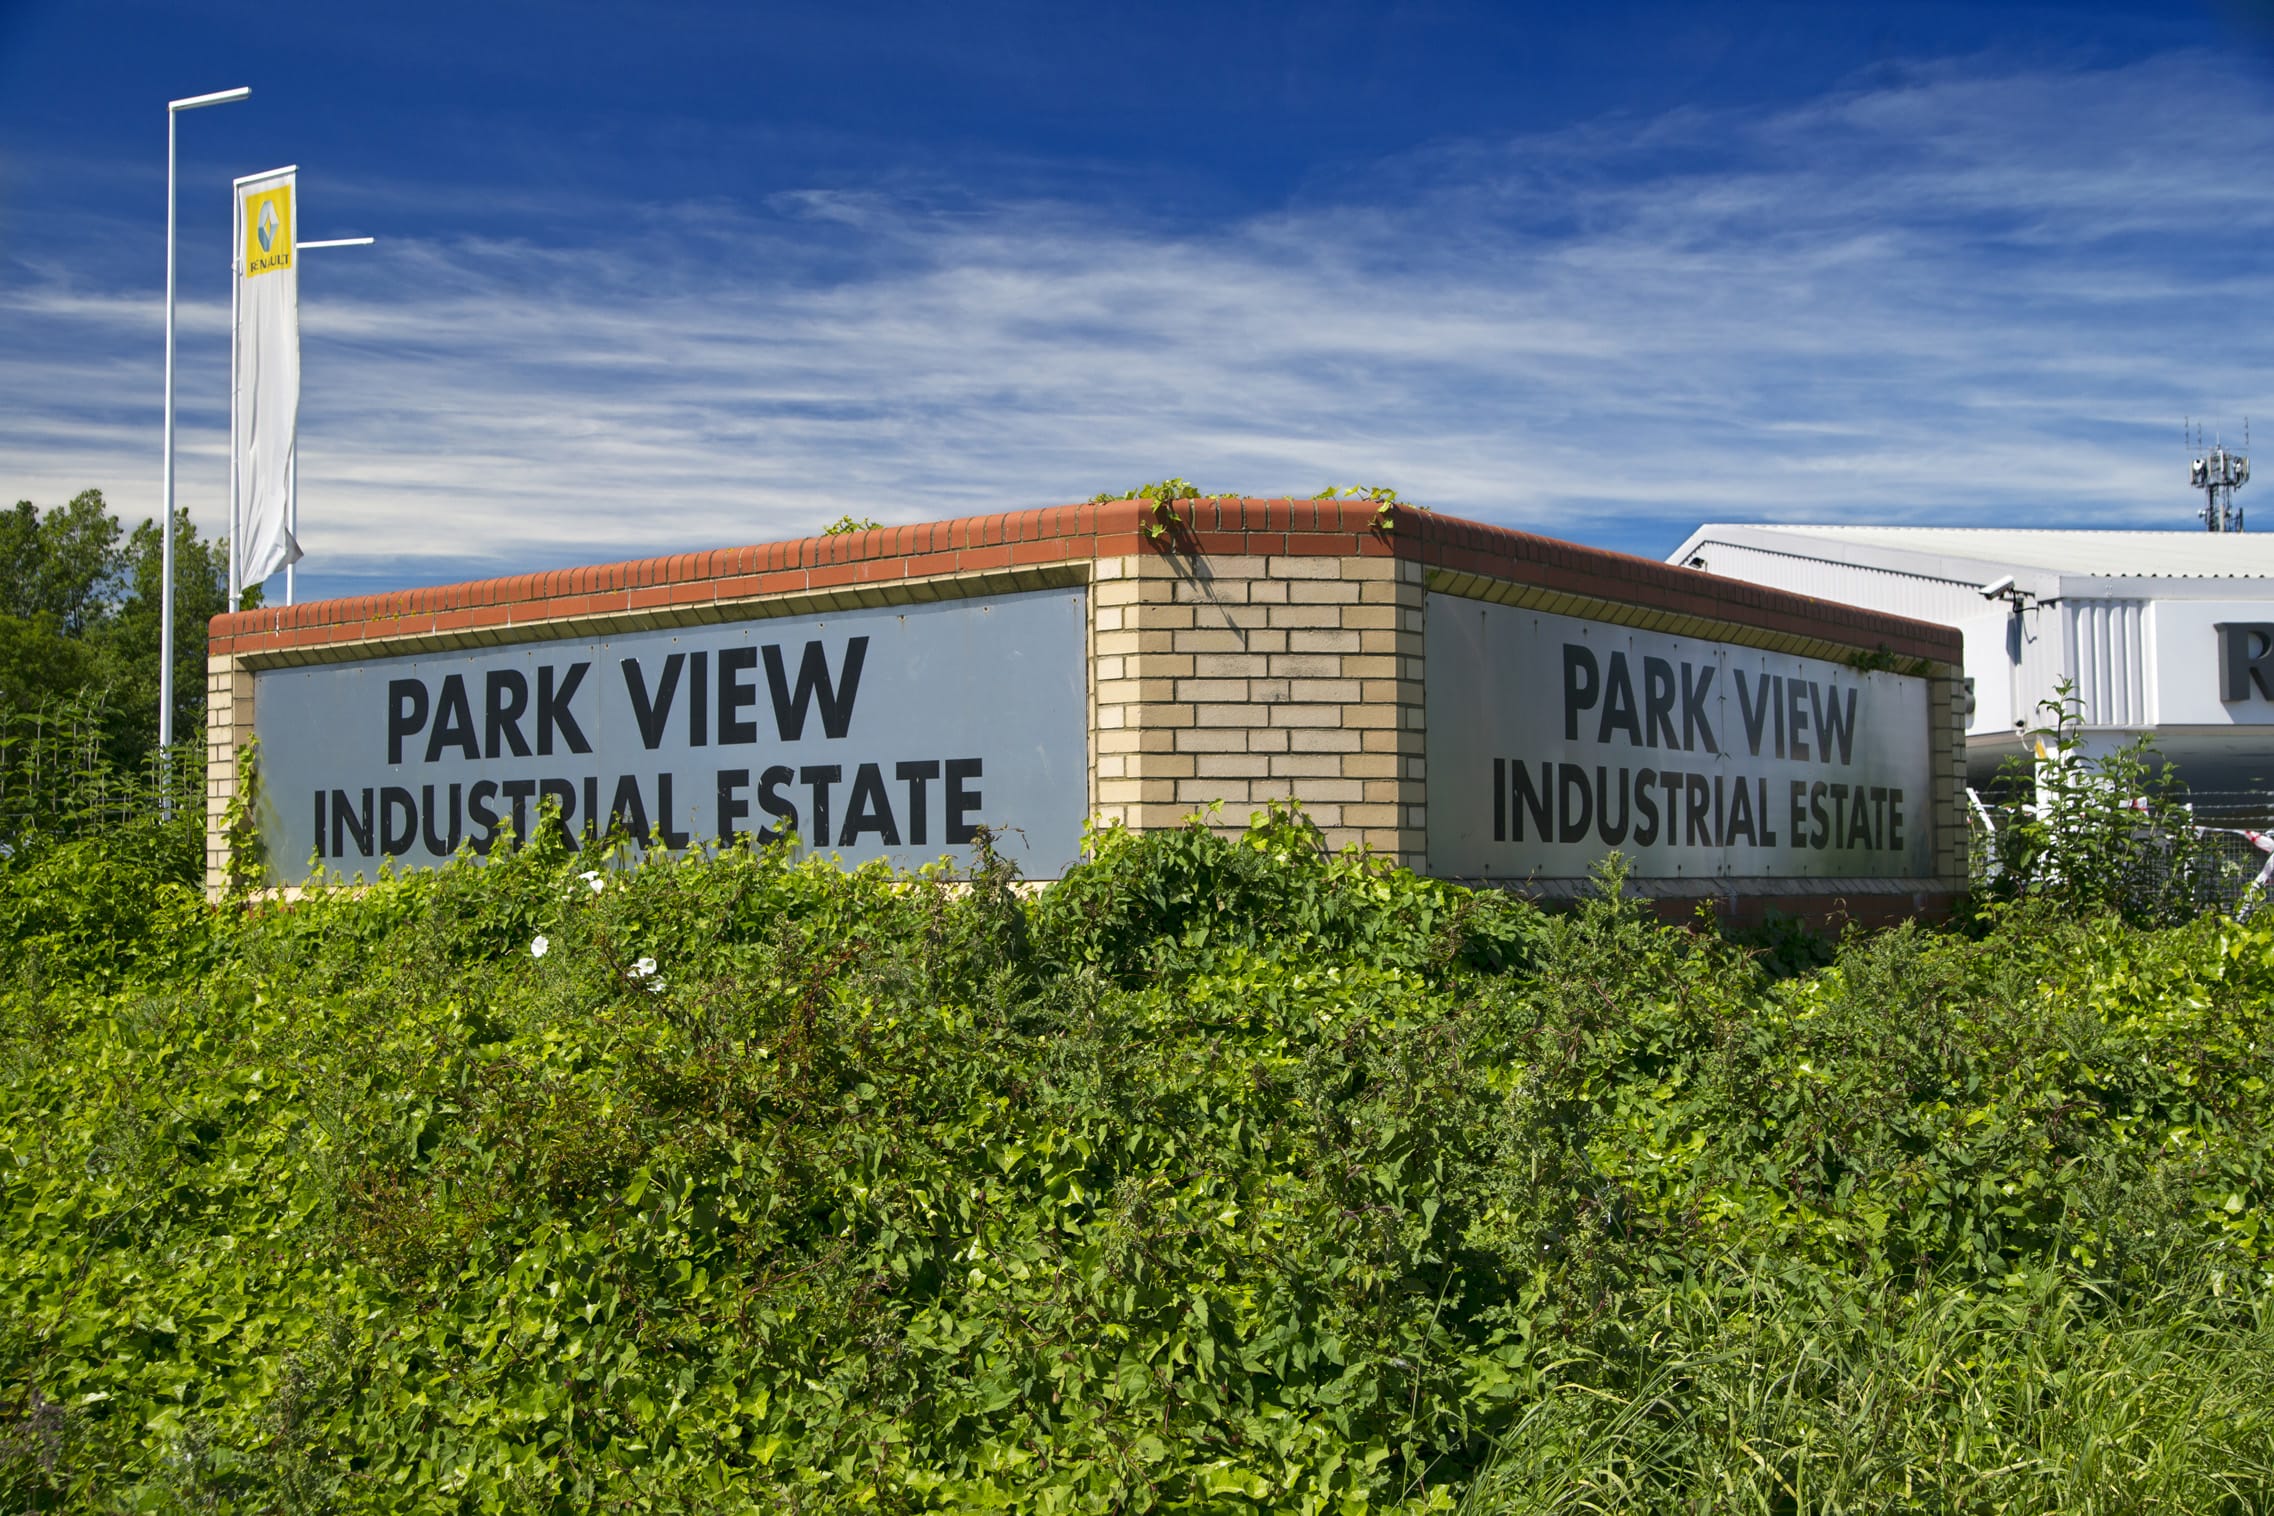 Park View Industrial Estate